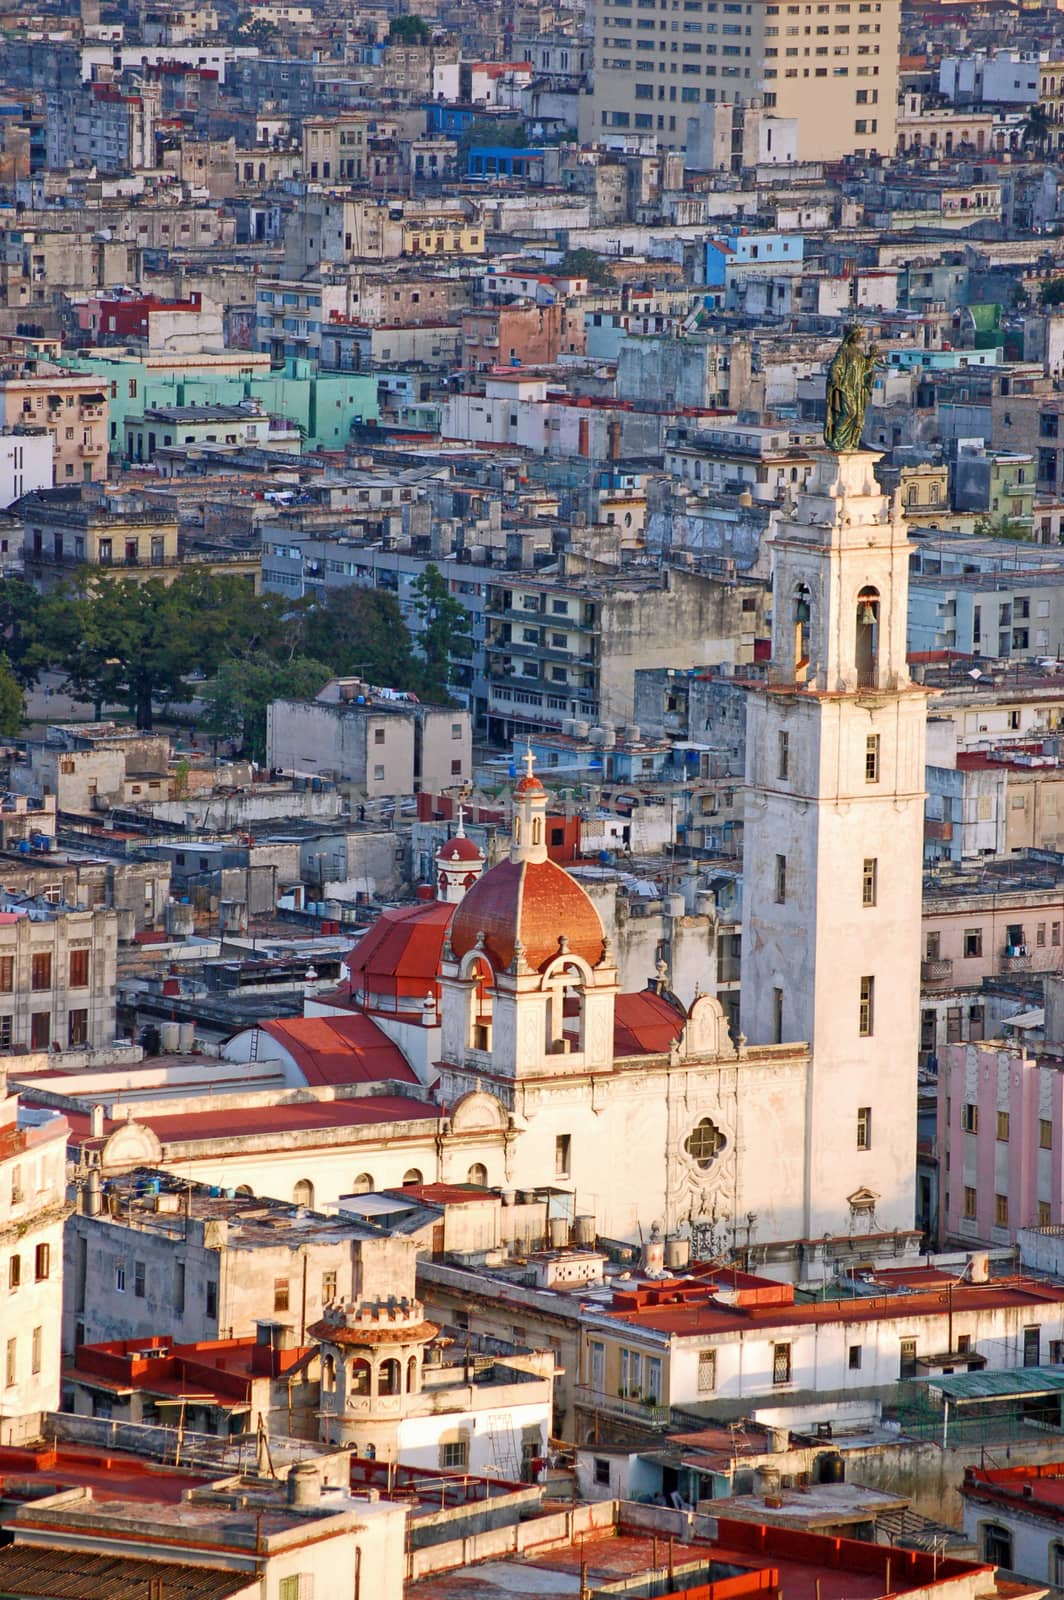 Convento & Iglesia del Carmen, Havana - aerial view by BasPhoto